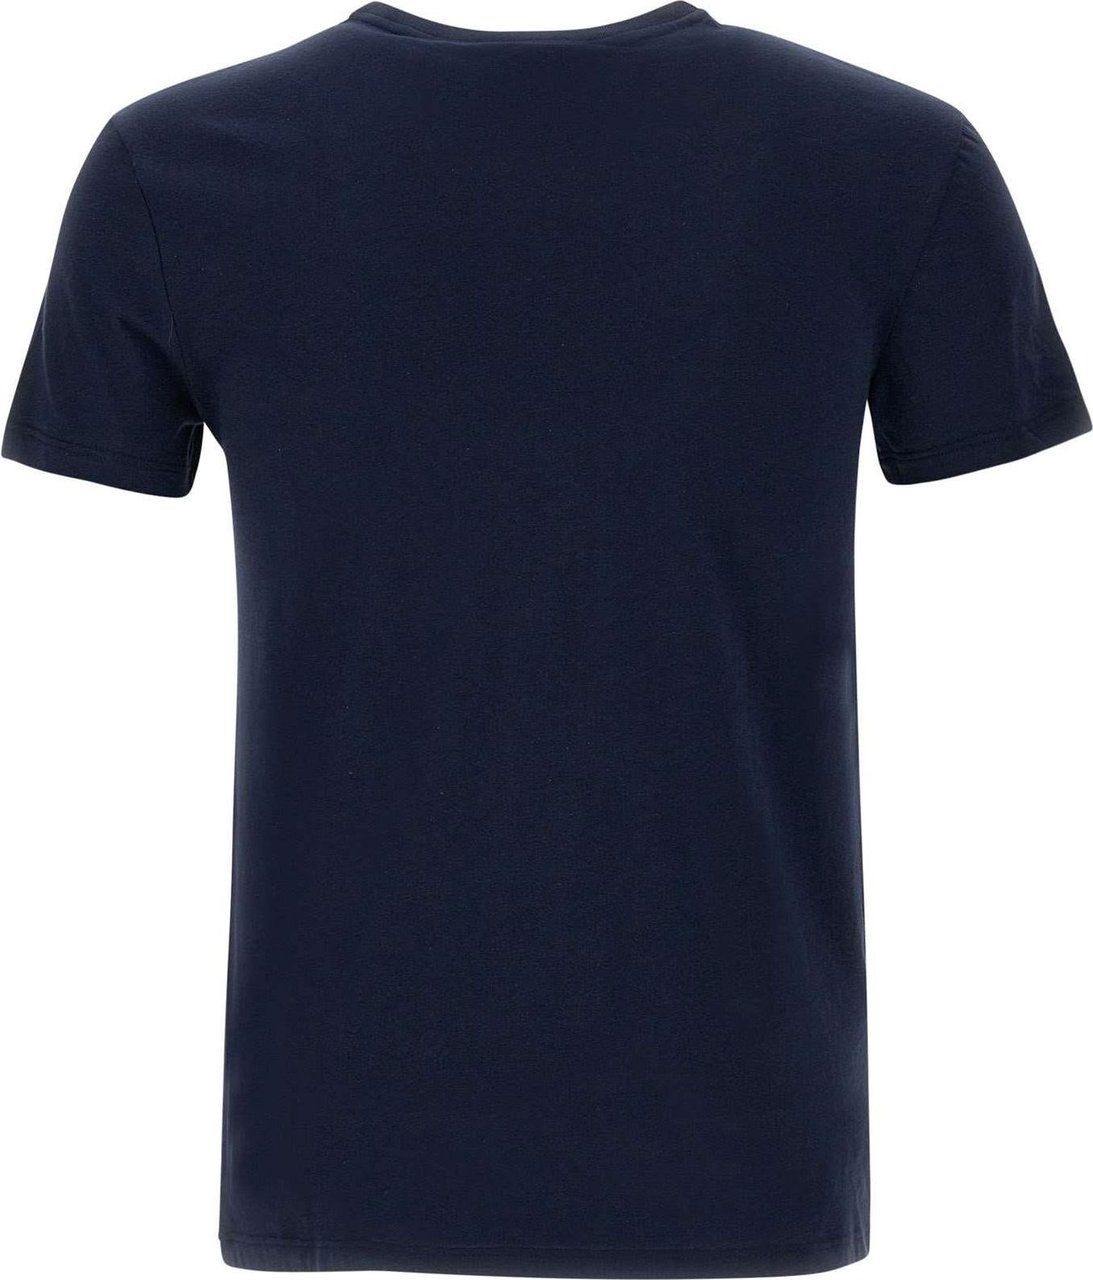 Lacoste T-shirt Navy Blue Blauw